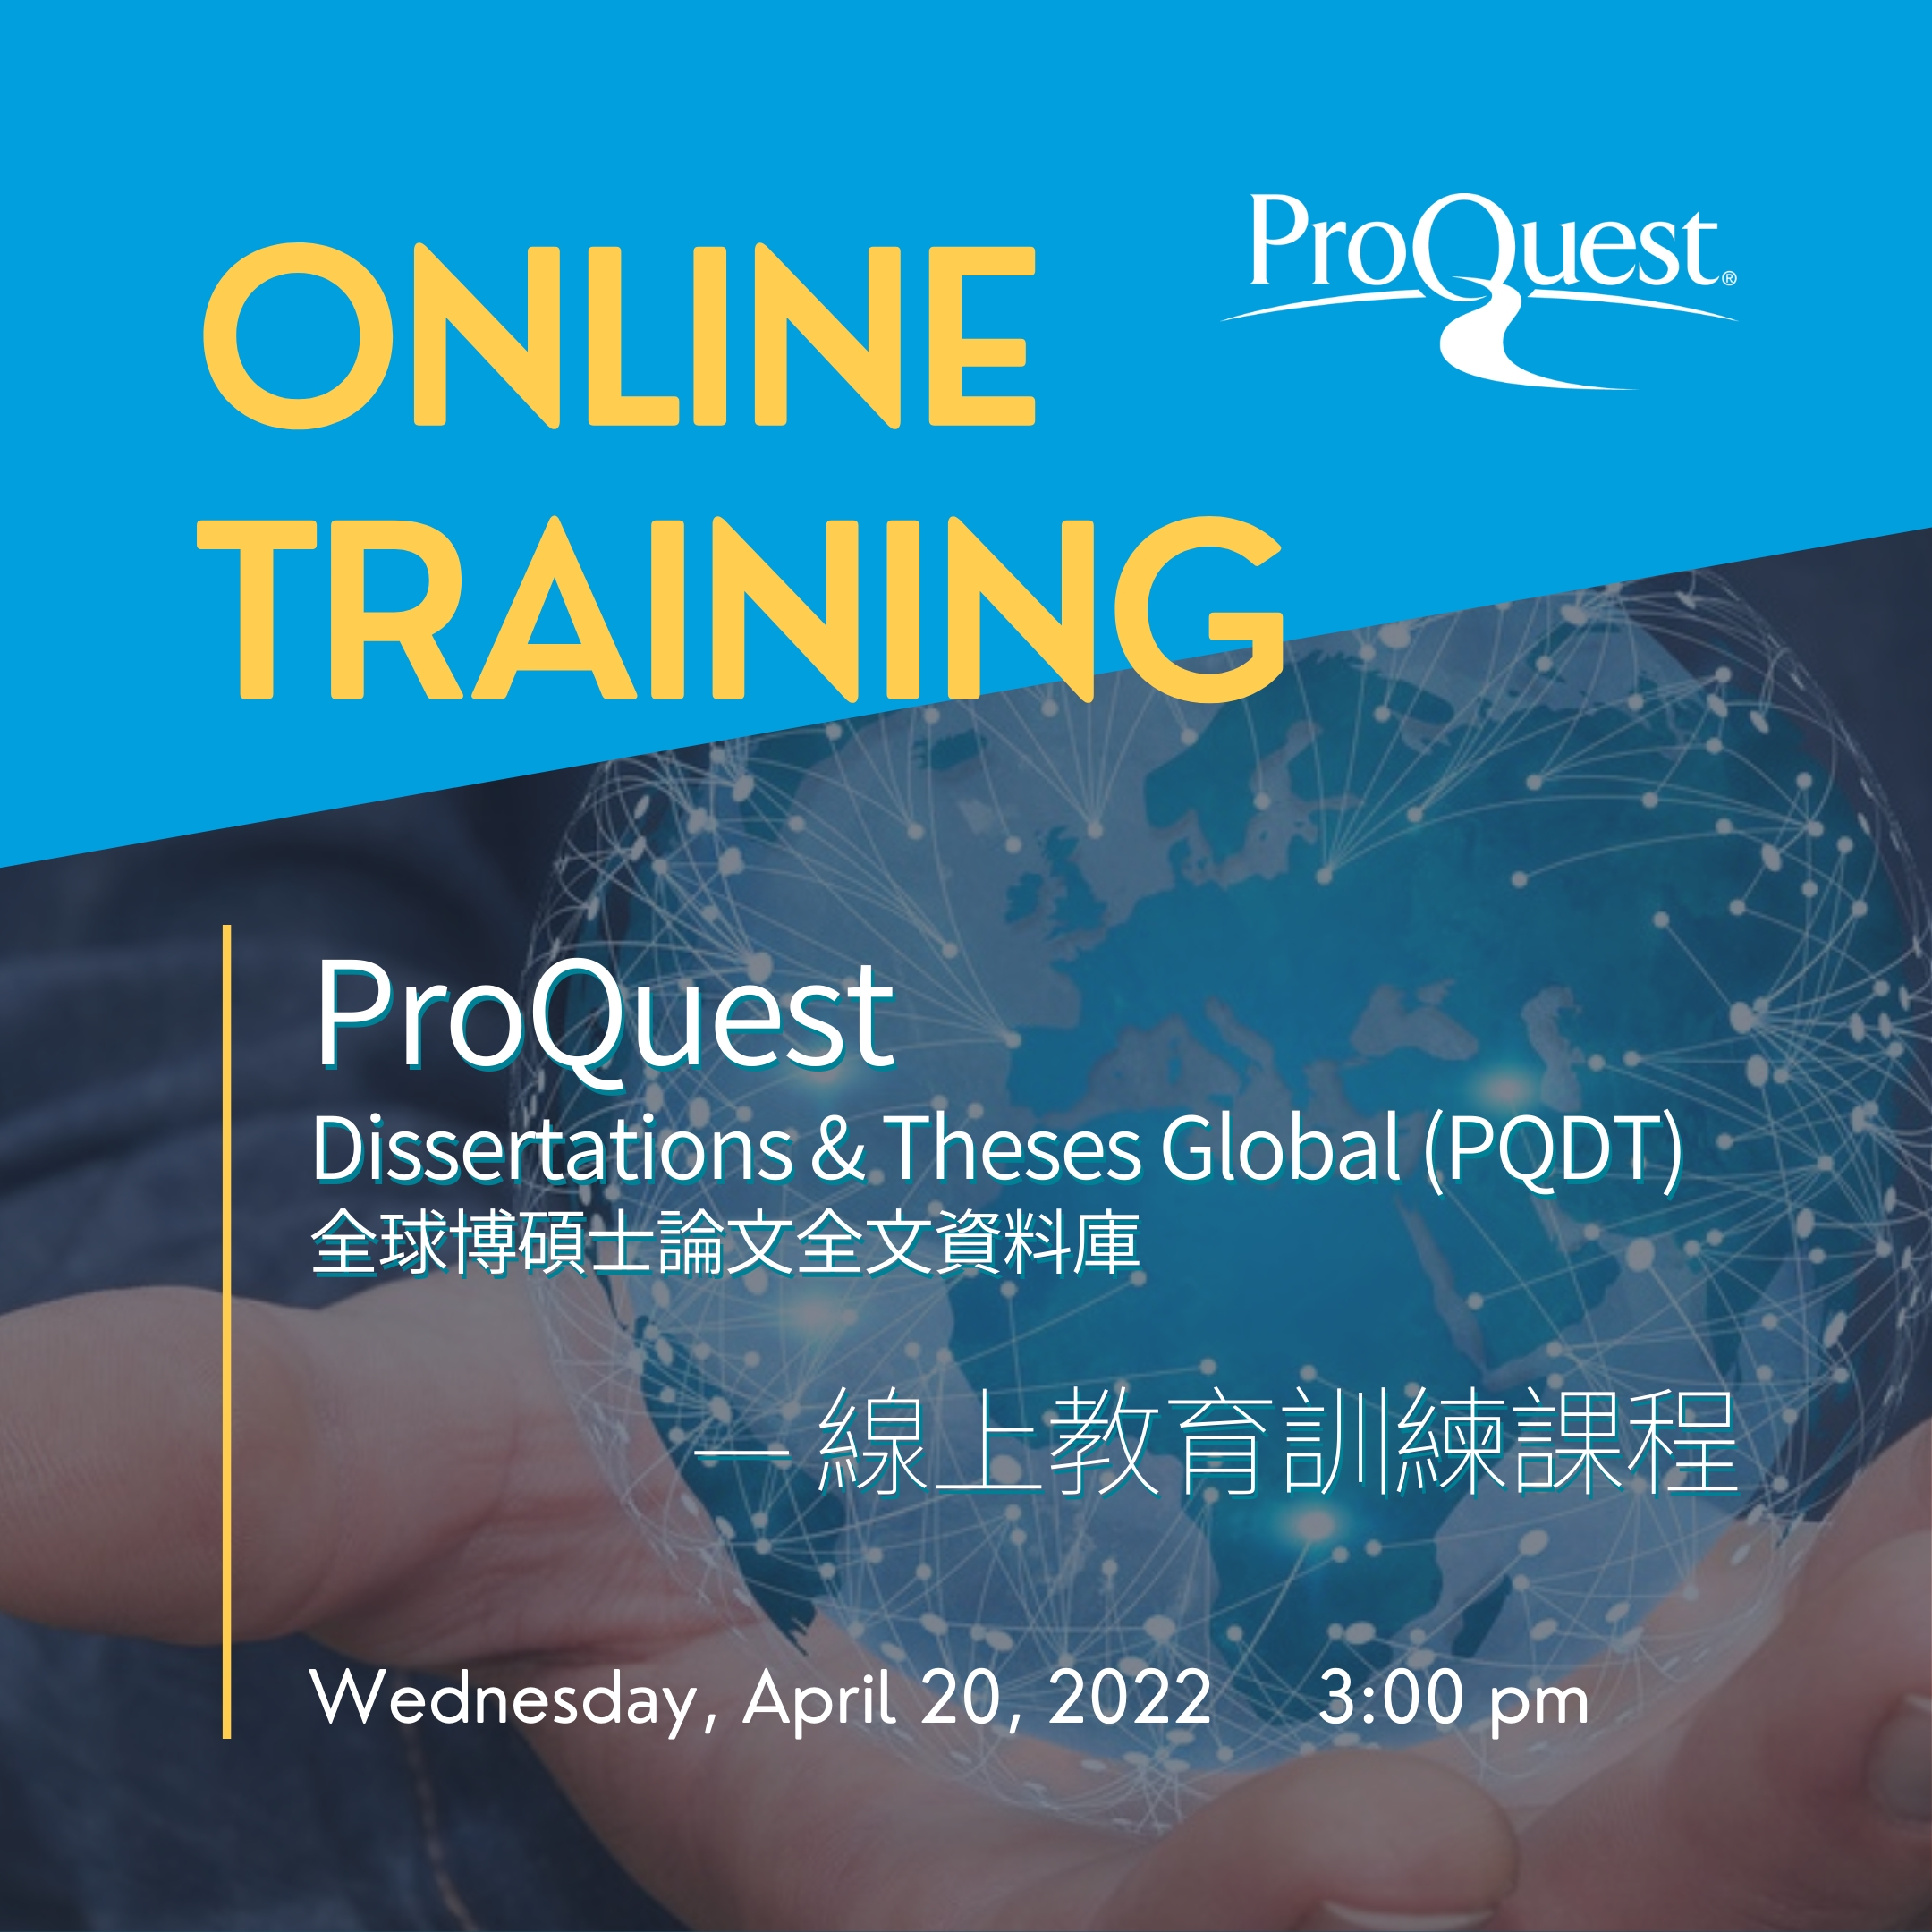 PROQUEST ONLINE TRAINING: ProQuest Dissertations & Theses Global 全球博碩士論文全文資料庫 — 線上教育訓練課程